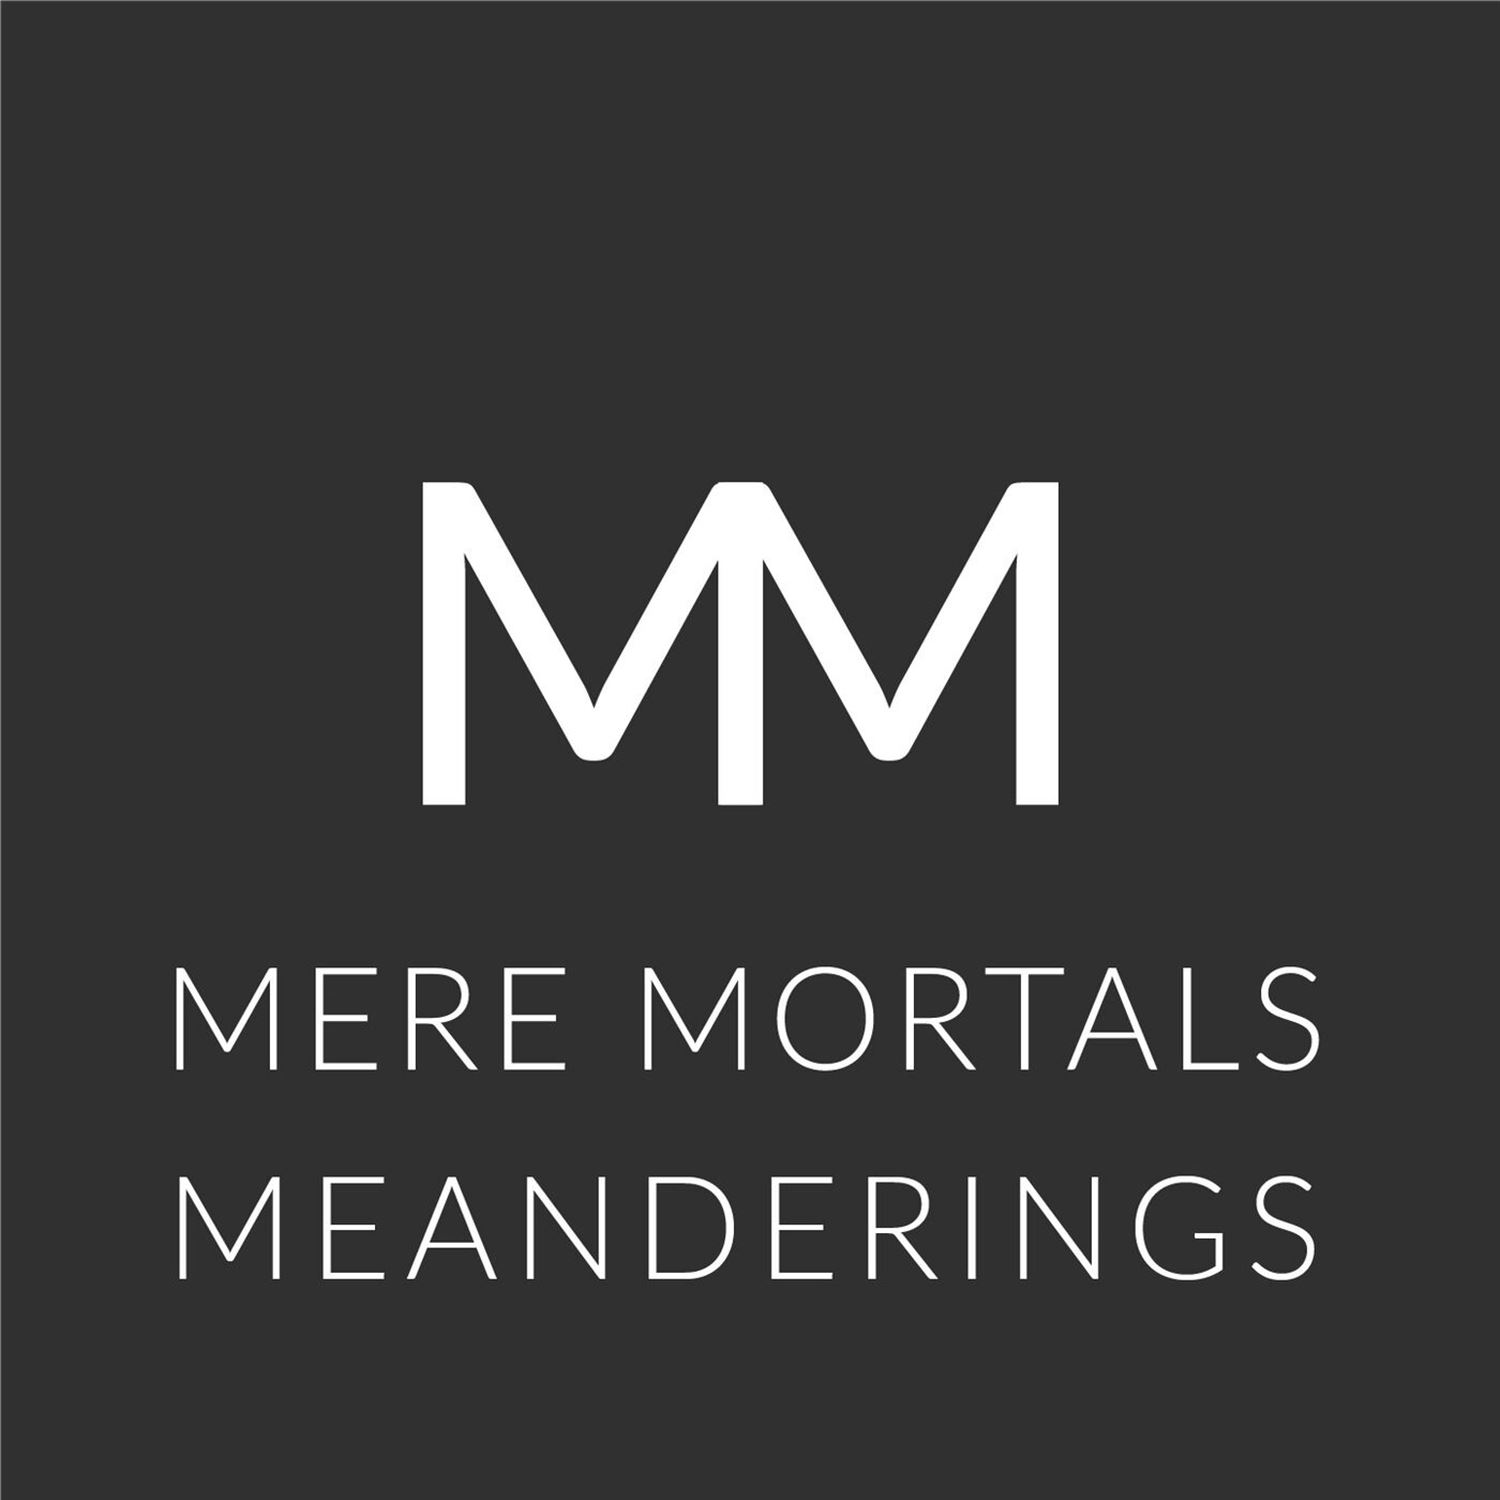 Let's Get Rid Of Weekends (Mere Mortals Episode #98 - Meanderings)